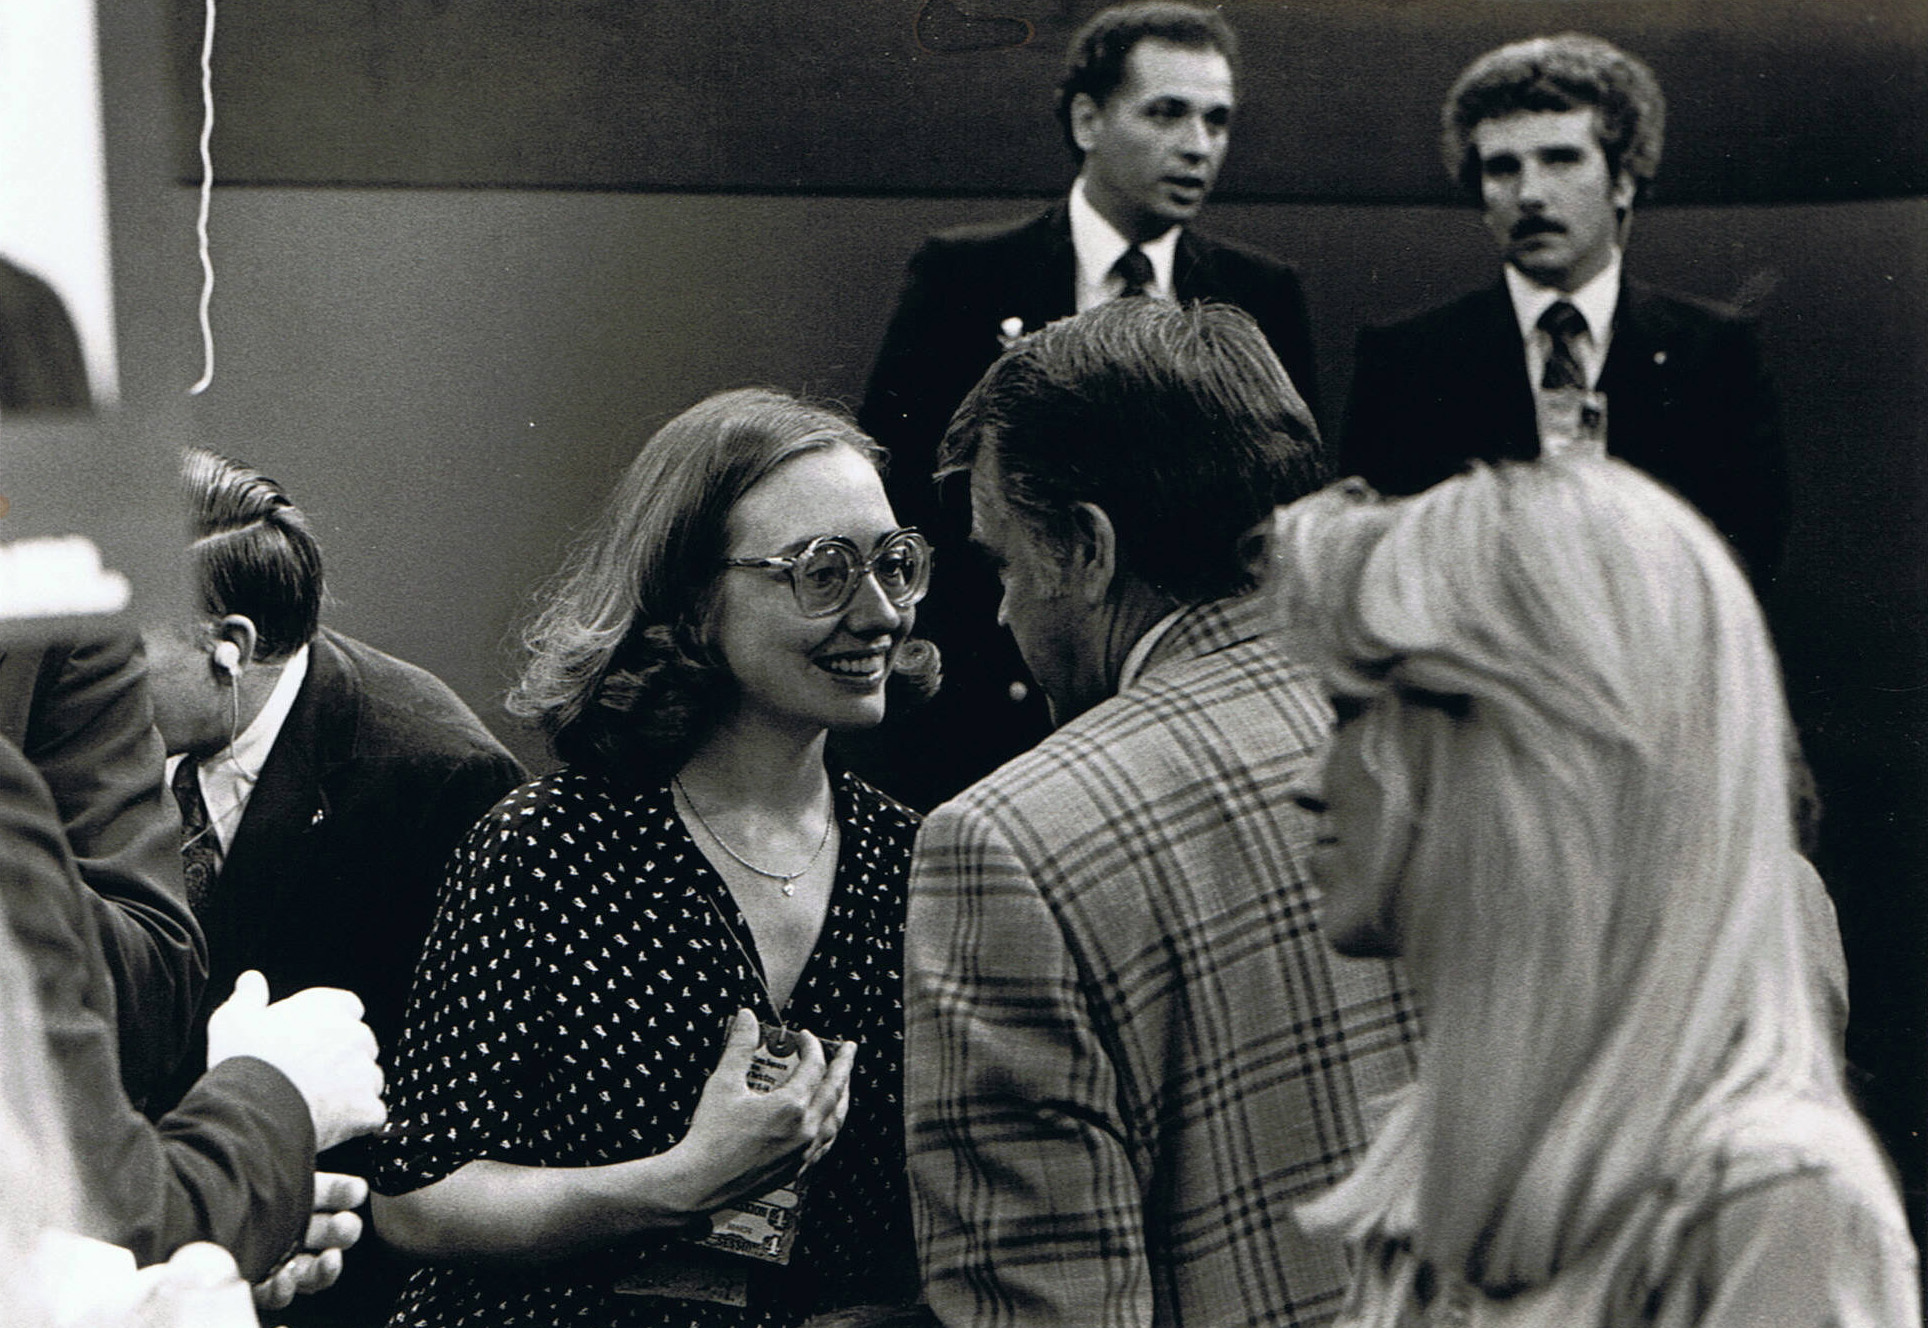 Hillary, c. 1976 or 1980.